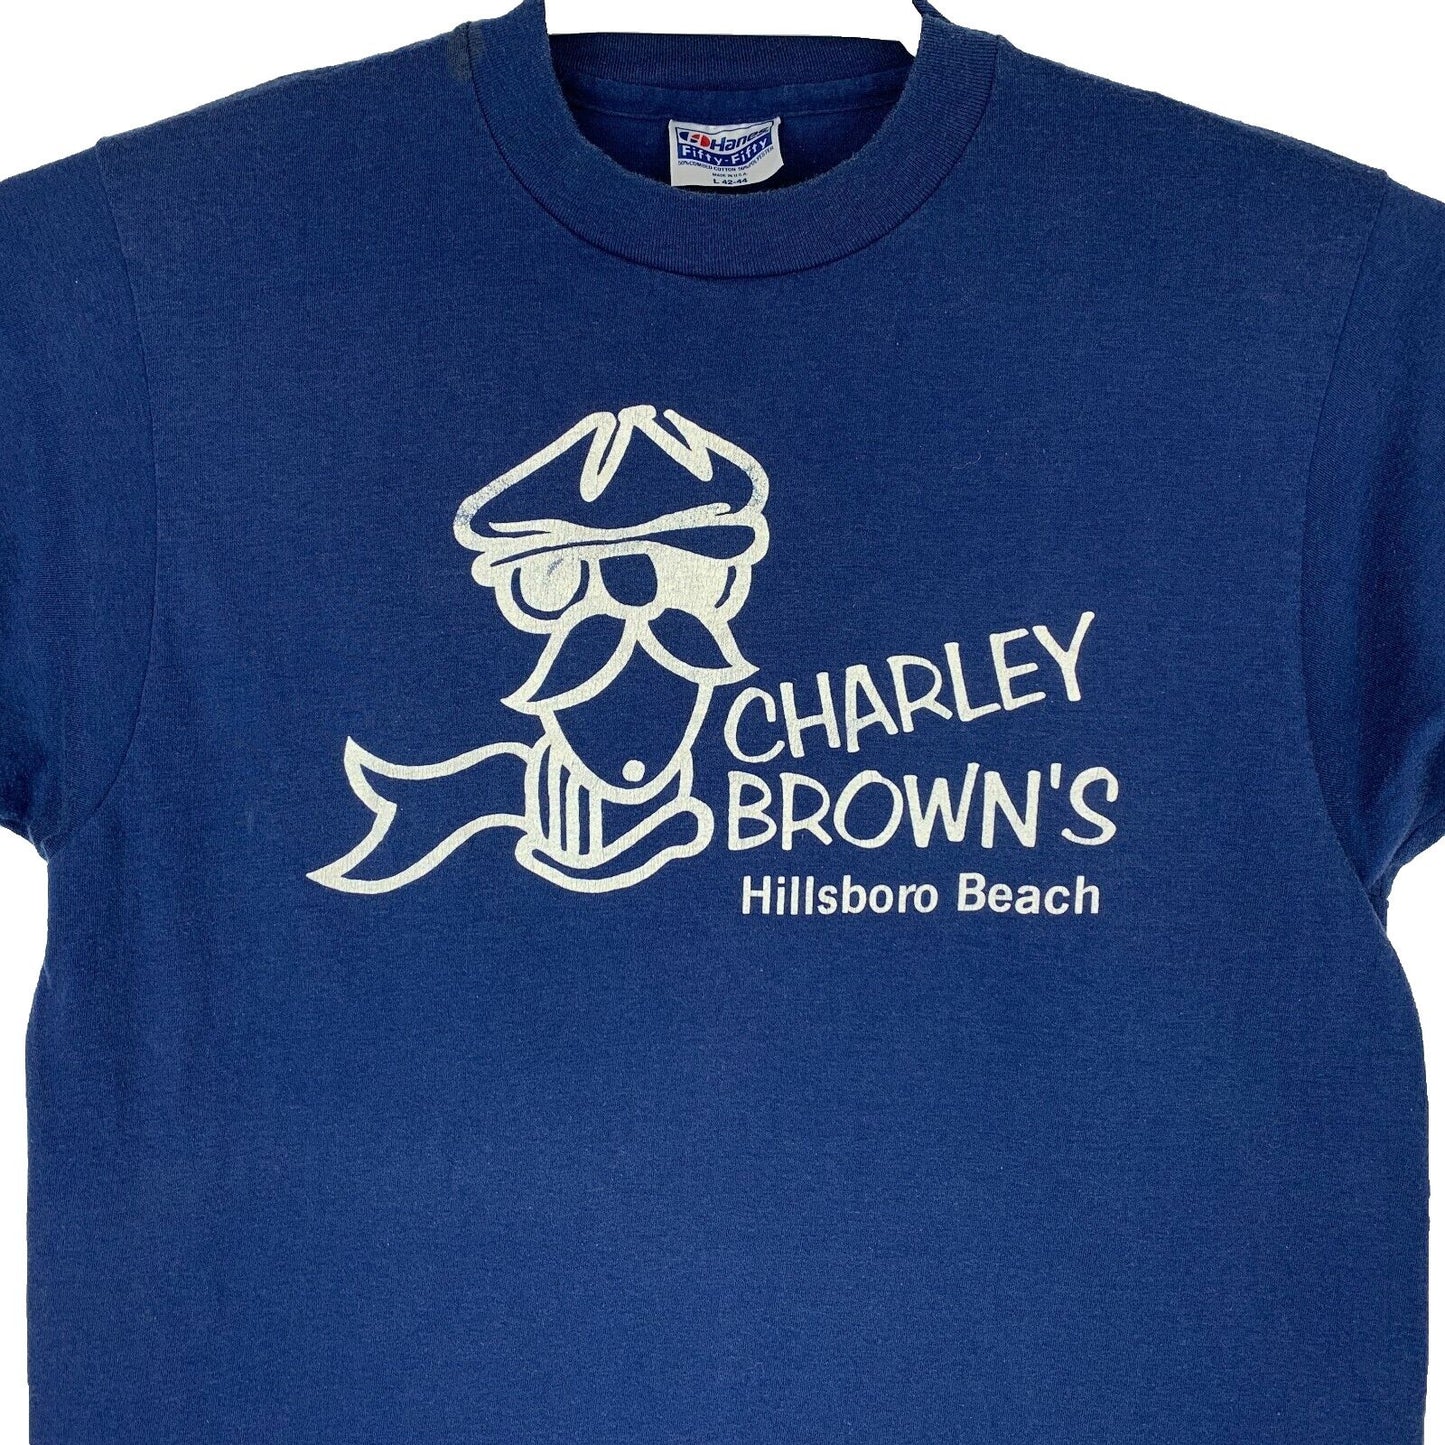 Charley Browns Hillsboro Beach Vintage 80s T Shirt Florida Made In USA Medium